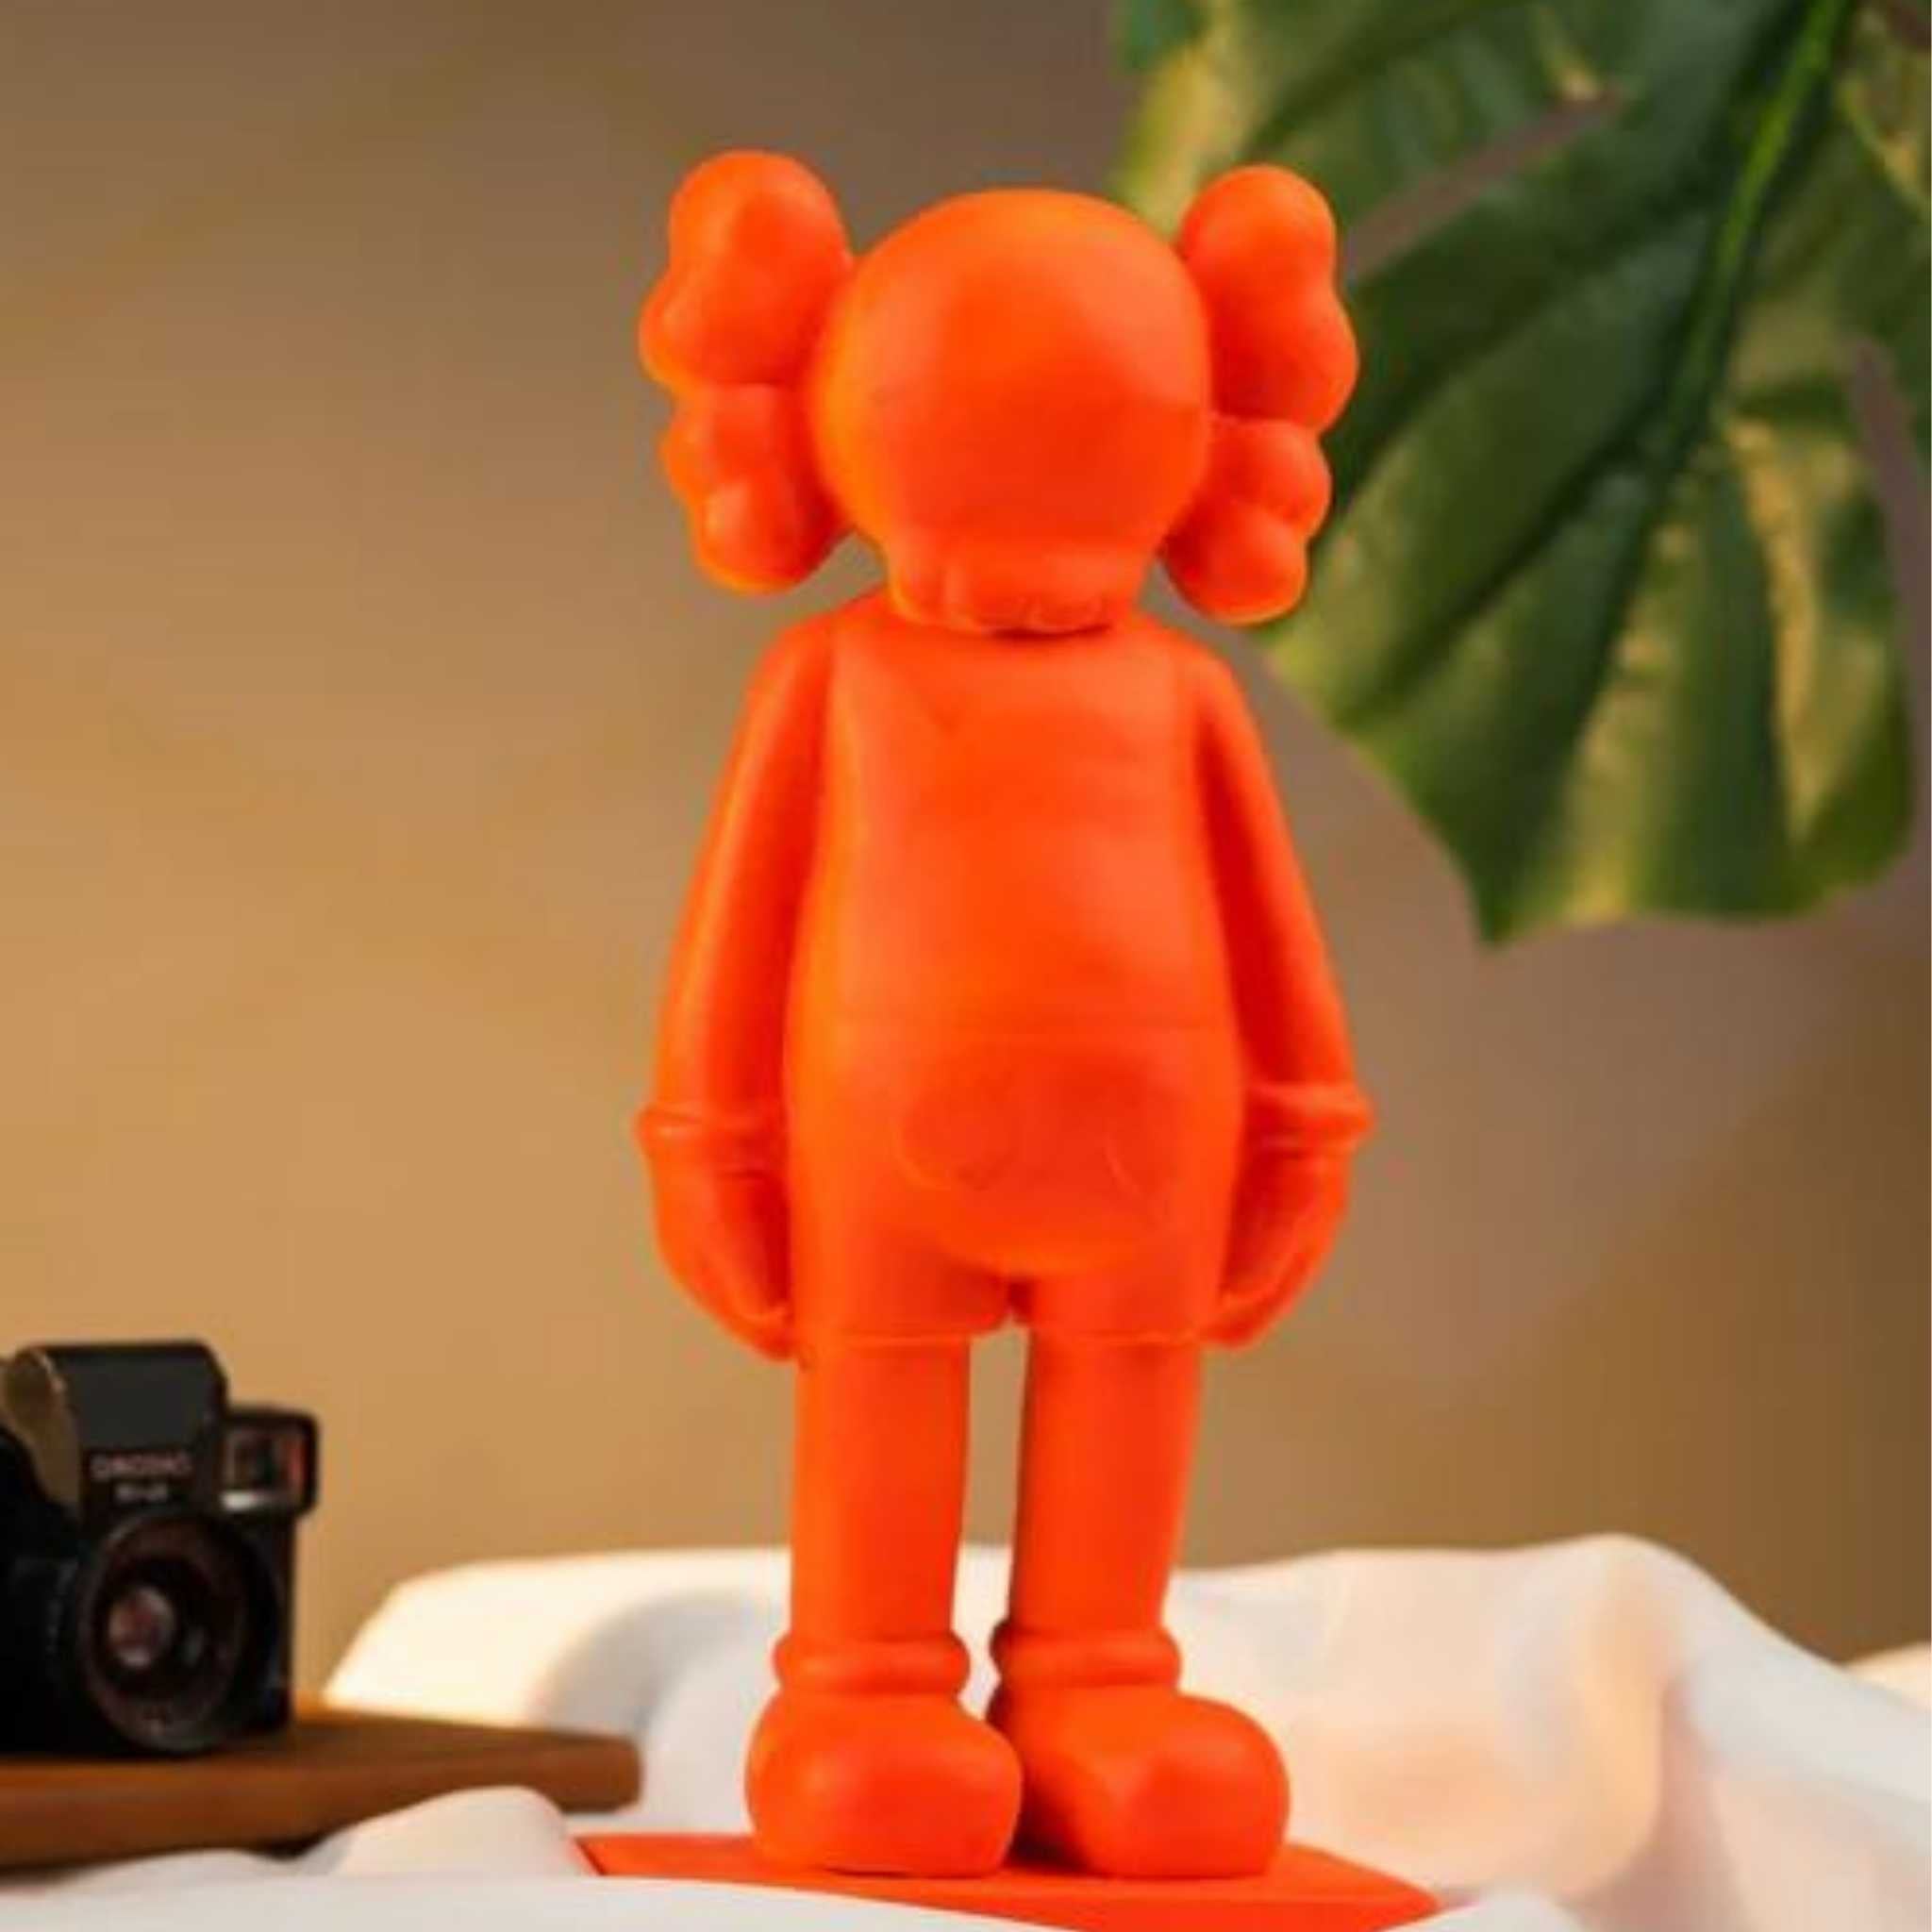 KAWS CHUM collectible figure - Orange